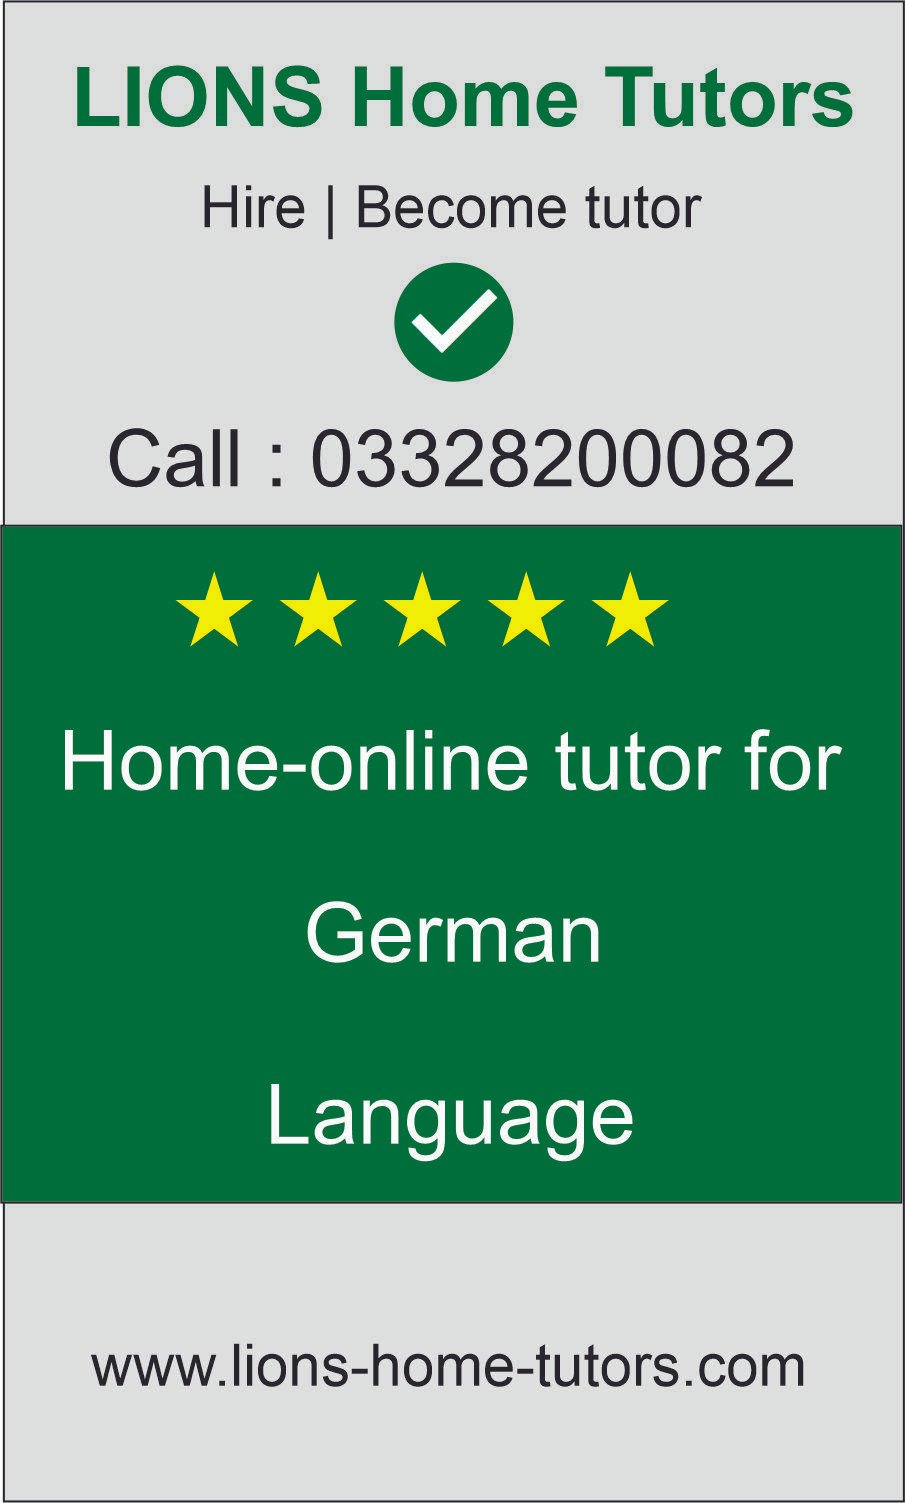 Home-online tutor for German Language